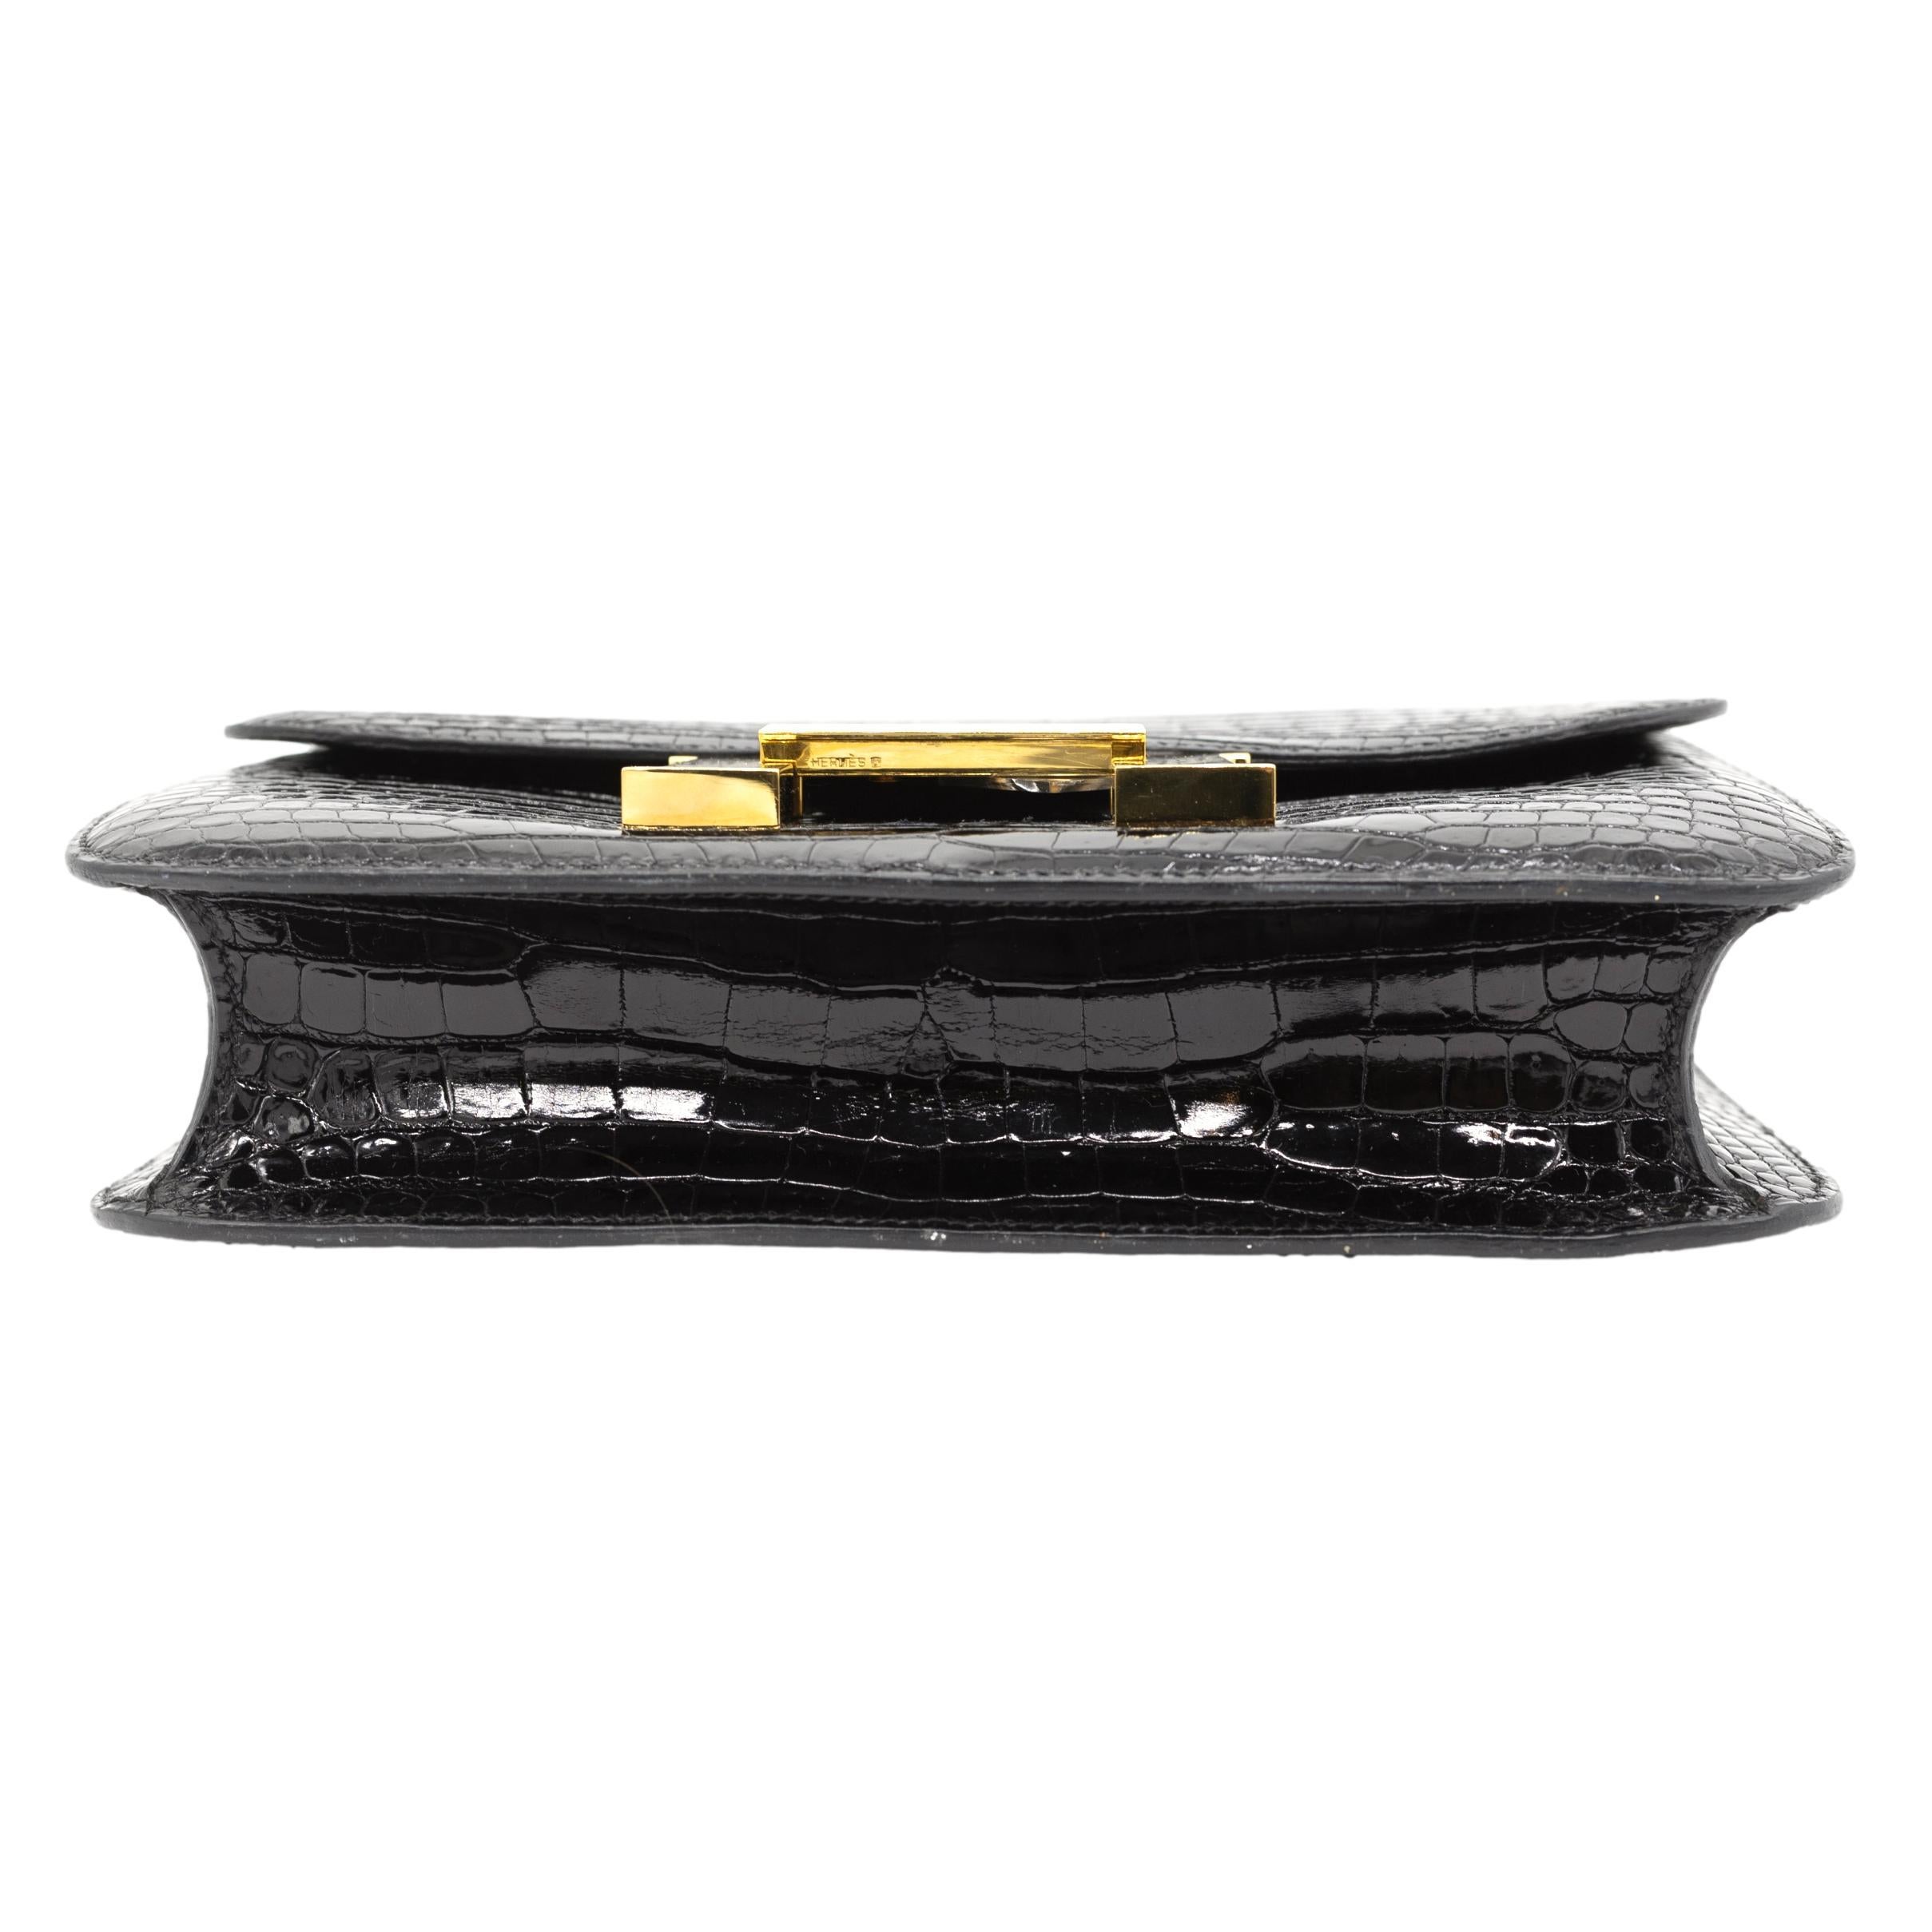 Hermès Shiny Black Porosus Crocodile 23cm Constance Bag with Gold Hardware, 2001 For Sale 2